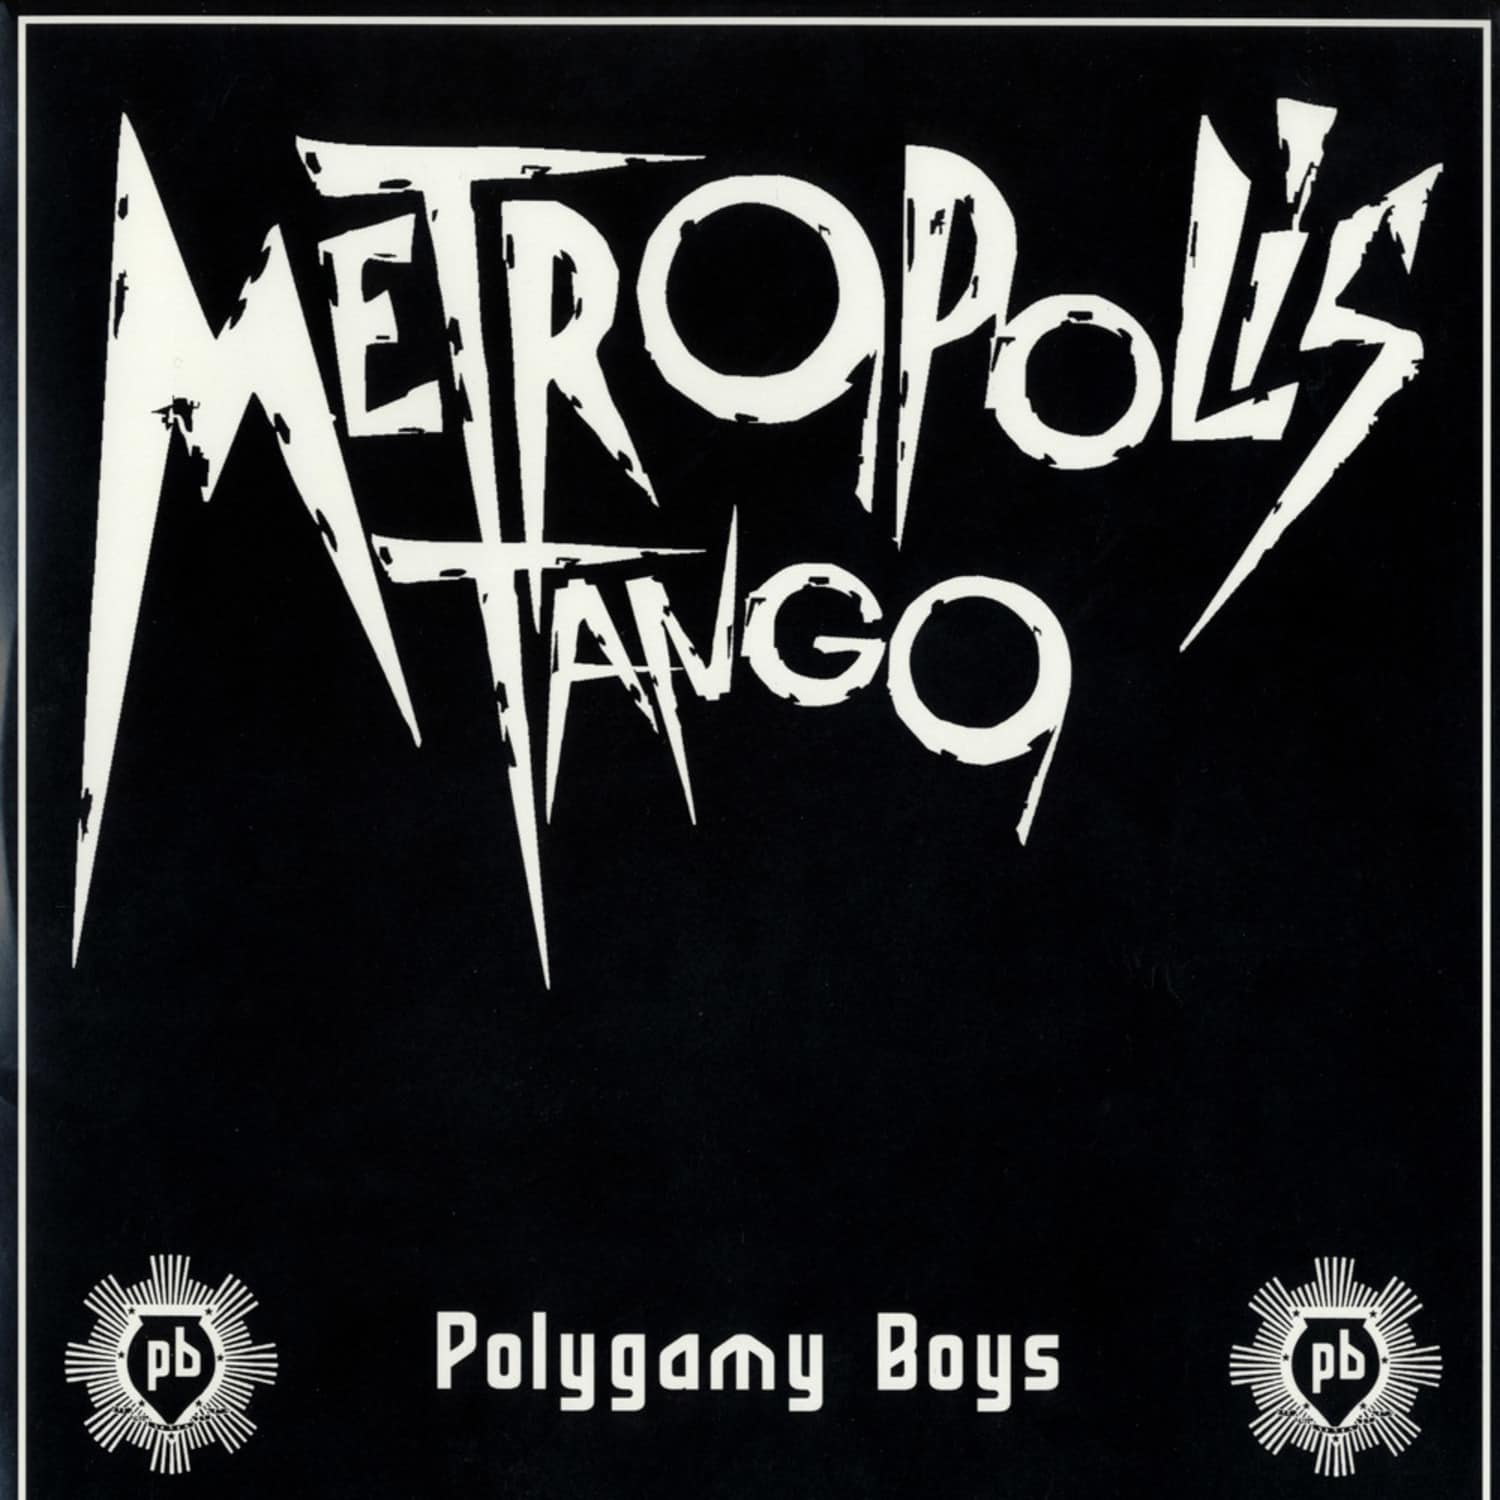 Polygamy Boys - METROPILIS TANGO EP